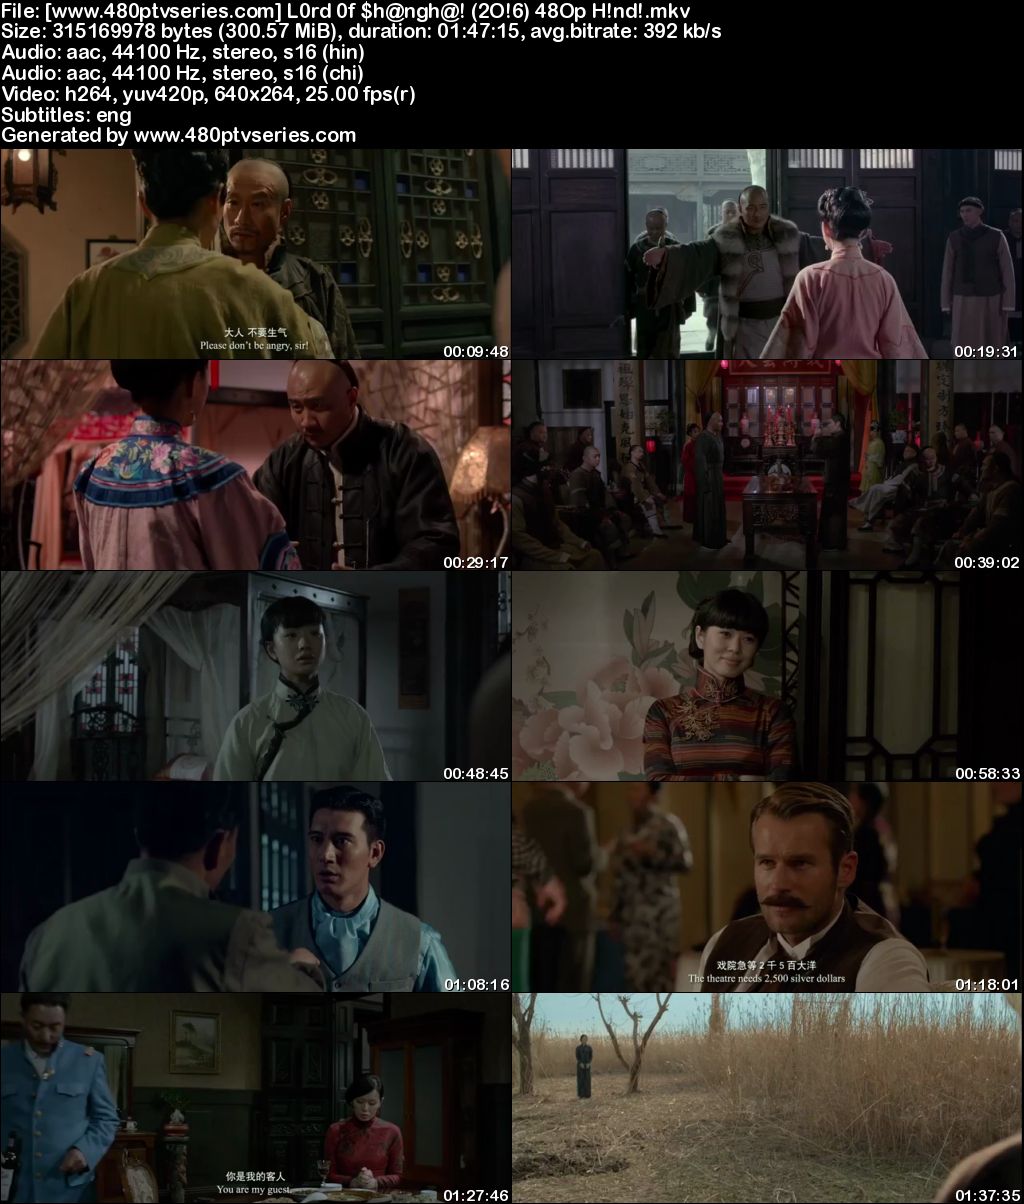 Lord of Shanghai (2016) 300MB Full Hindi Dual Audio Movie Download 480p Web-DL Free Watch Online Full Movie Download Worldfree4u 9xmovies